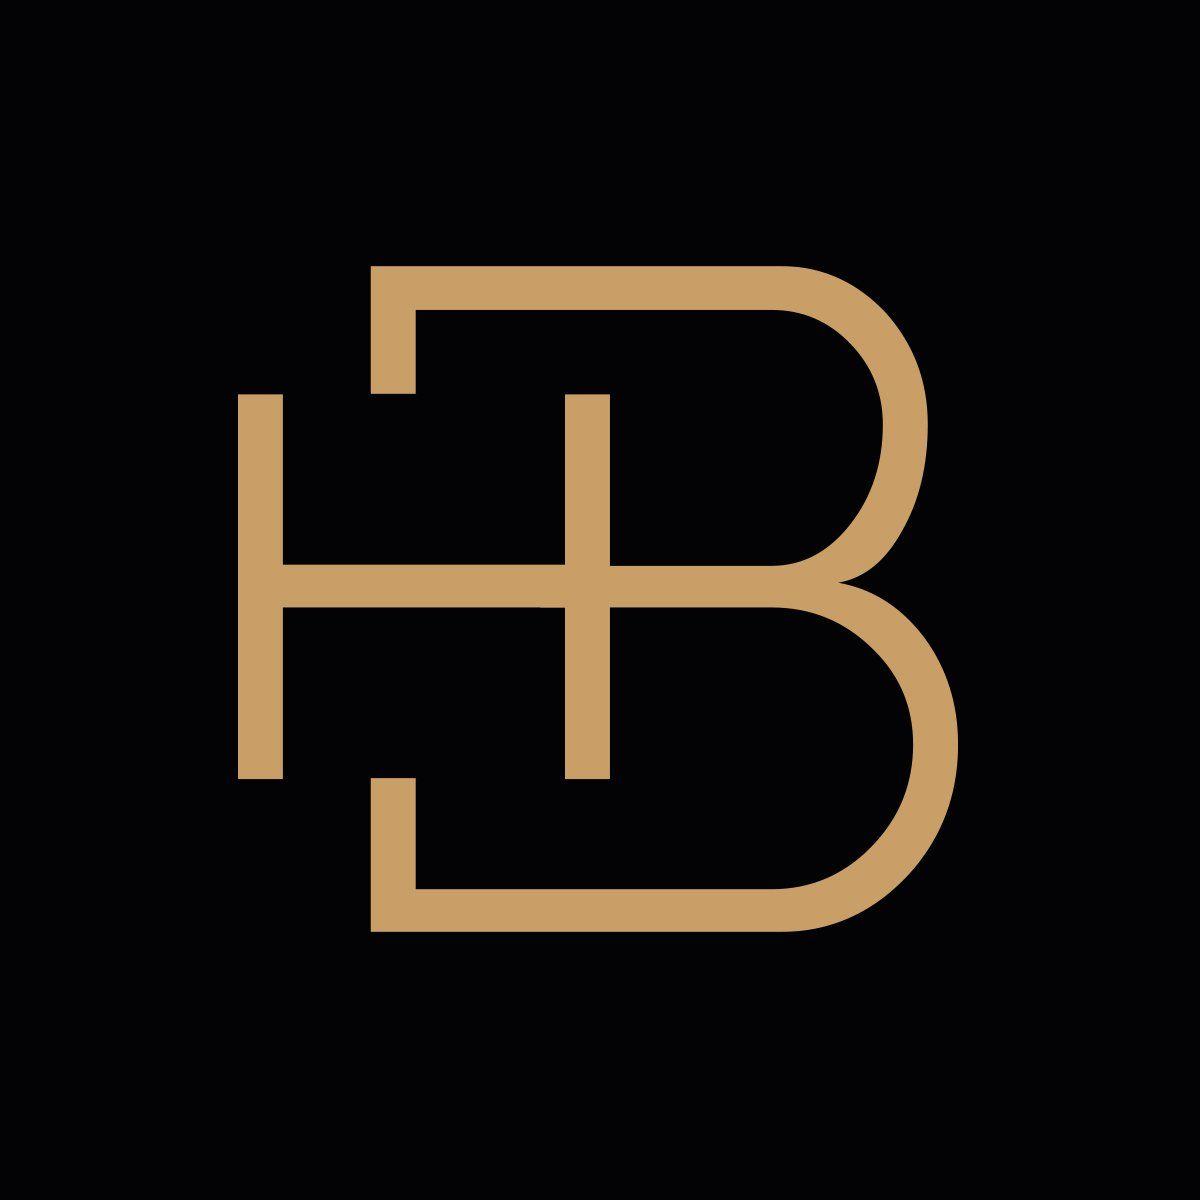 HB Logo - Ben Kókolas - 'HB' Monogram Logo Idea For Made Up